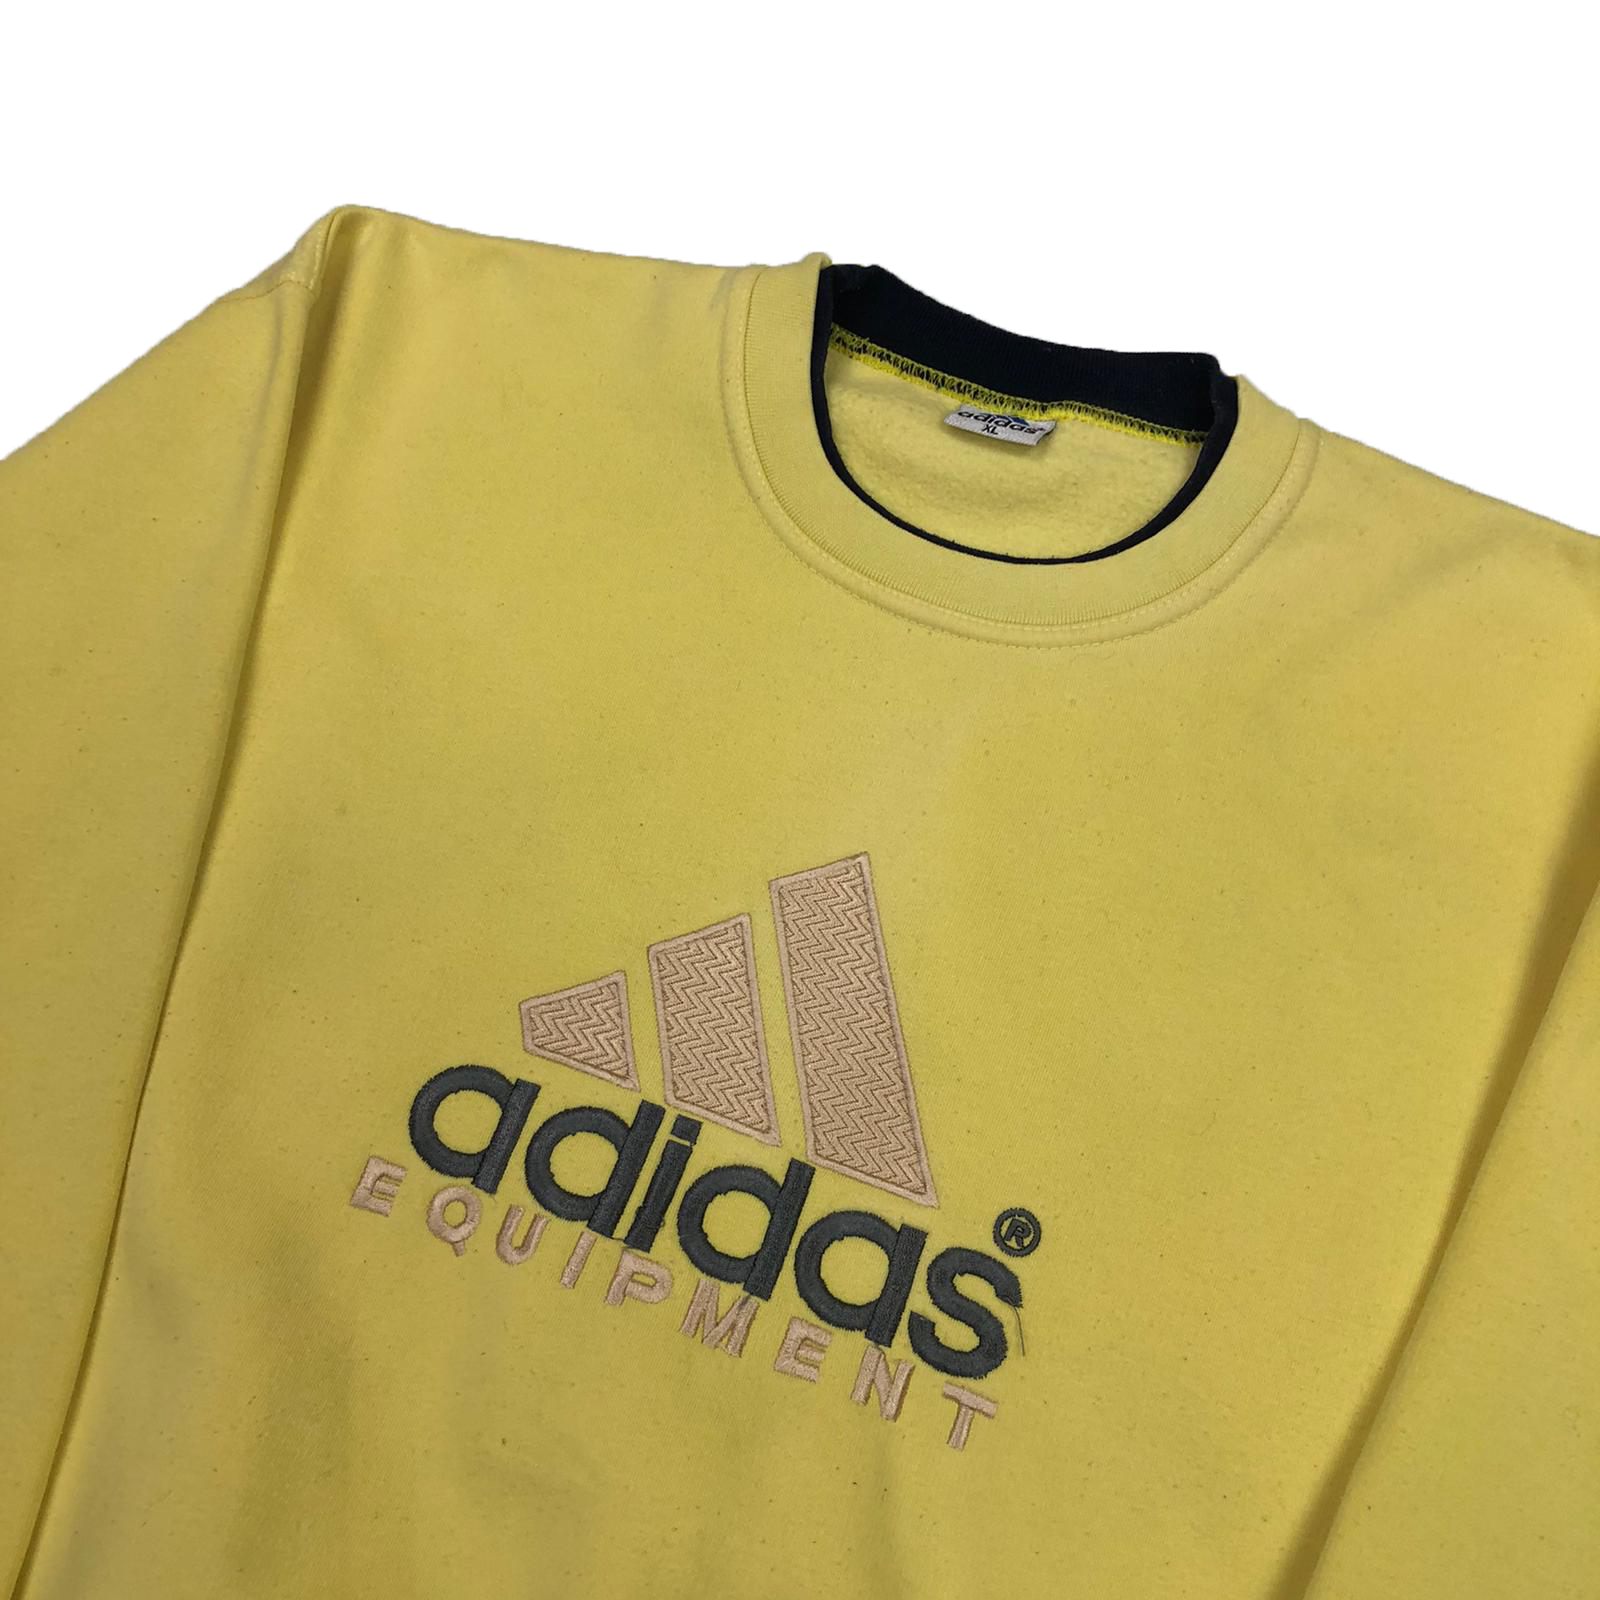 Adidas EQT sweatshirt